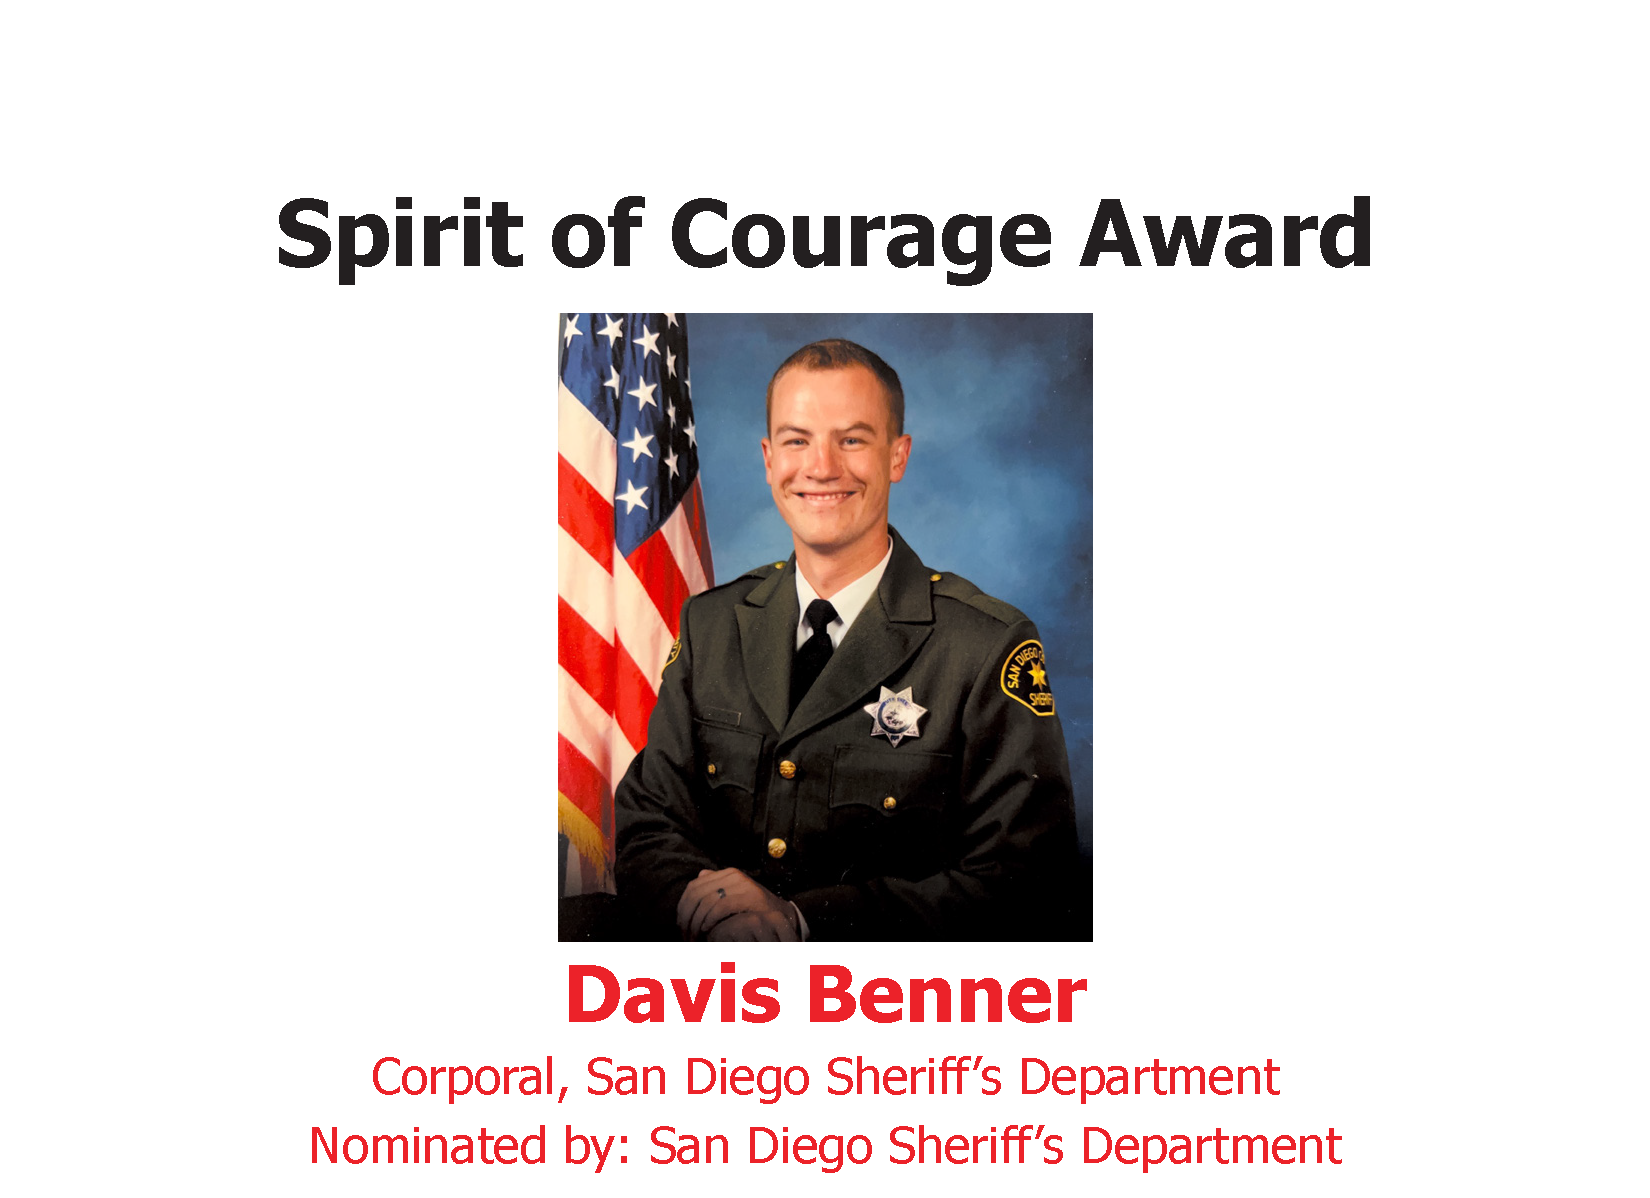 Spirit of Courage Award: Davis Benner